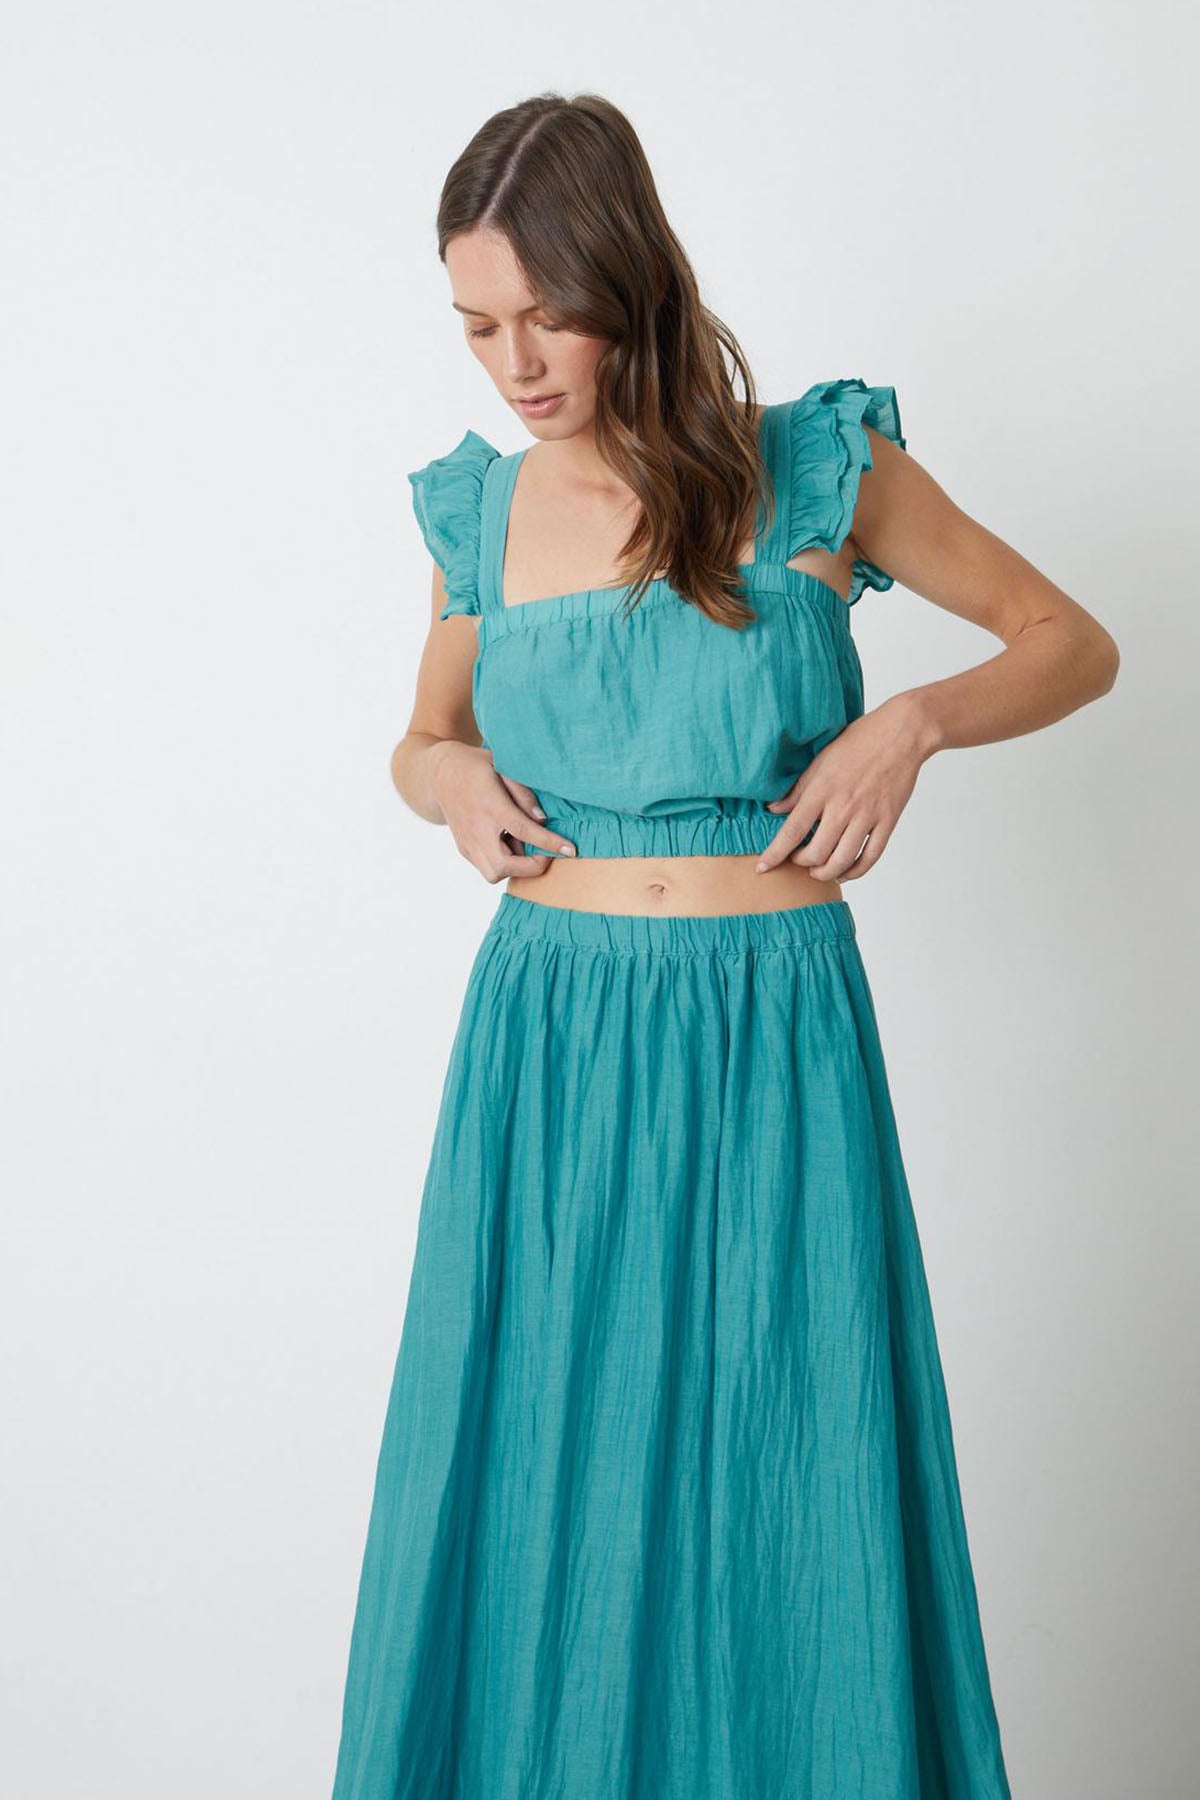 A woman wearing a Velvet by Graham & Spencer teal maxi dress.-26544387260609